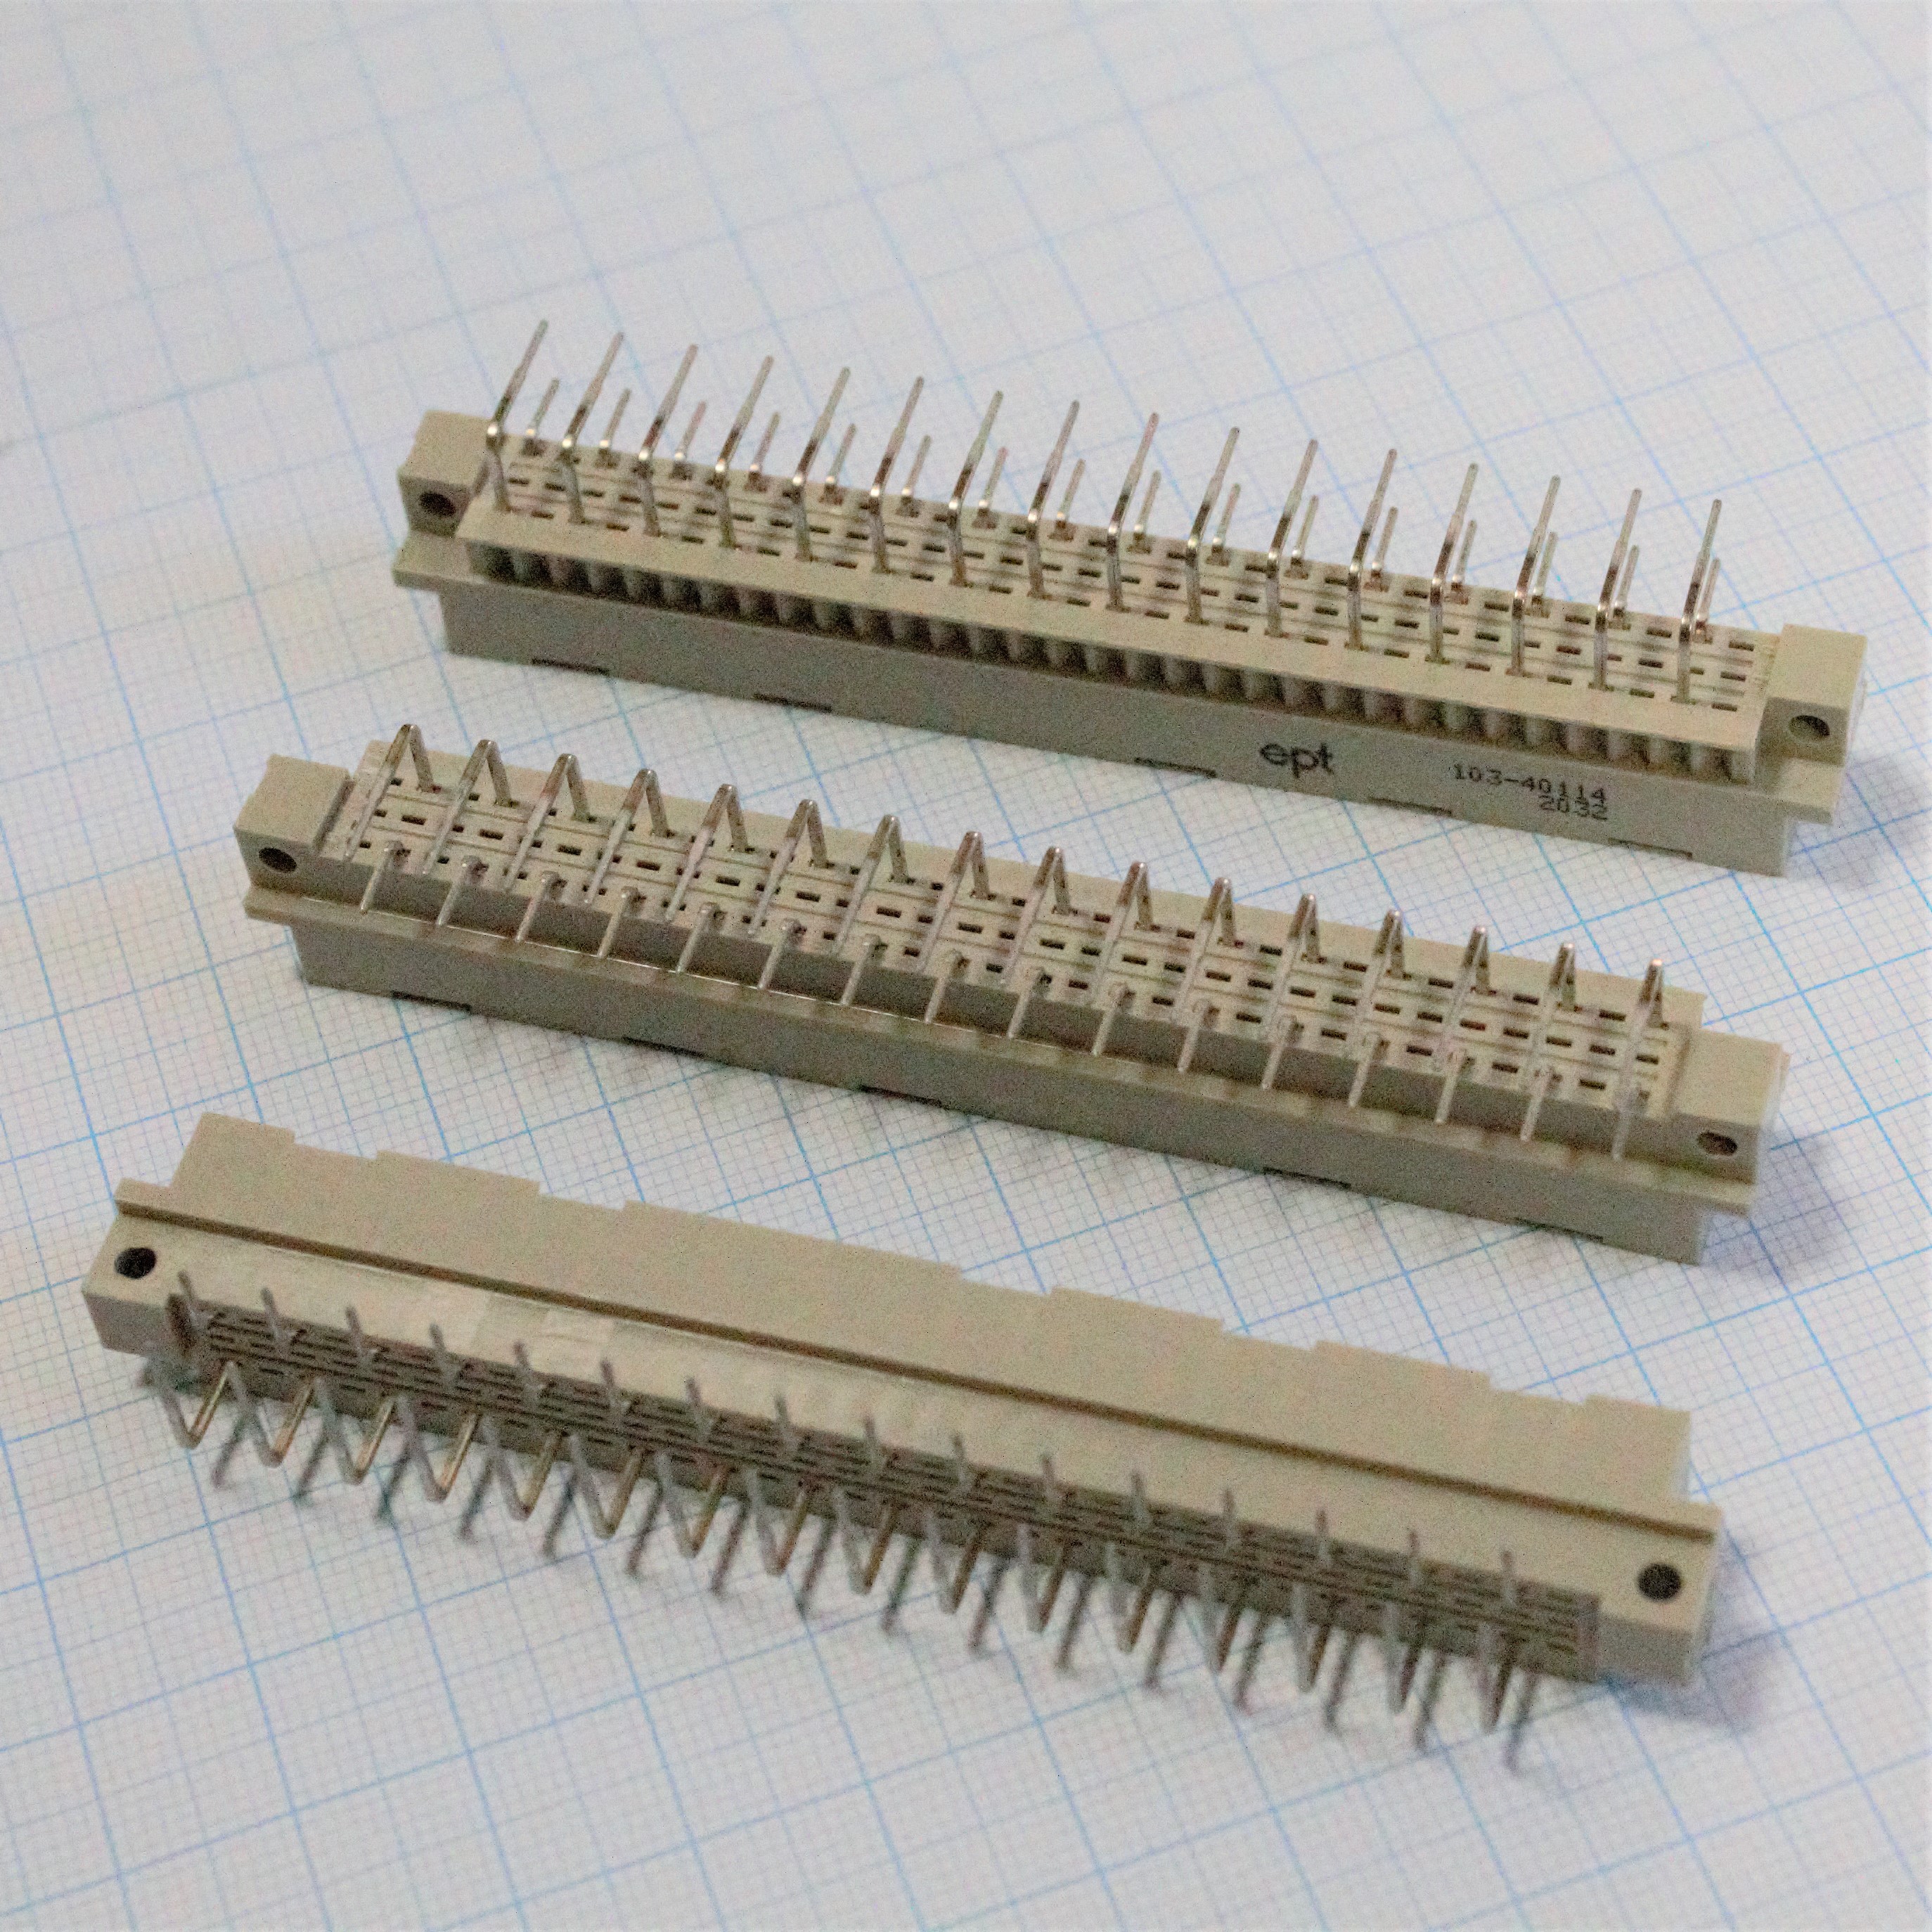 DIN 41612 32 pin (�) ������ ���� 3 ���� (AC) (103-40114) ��� 5,08 ��, ������ ept